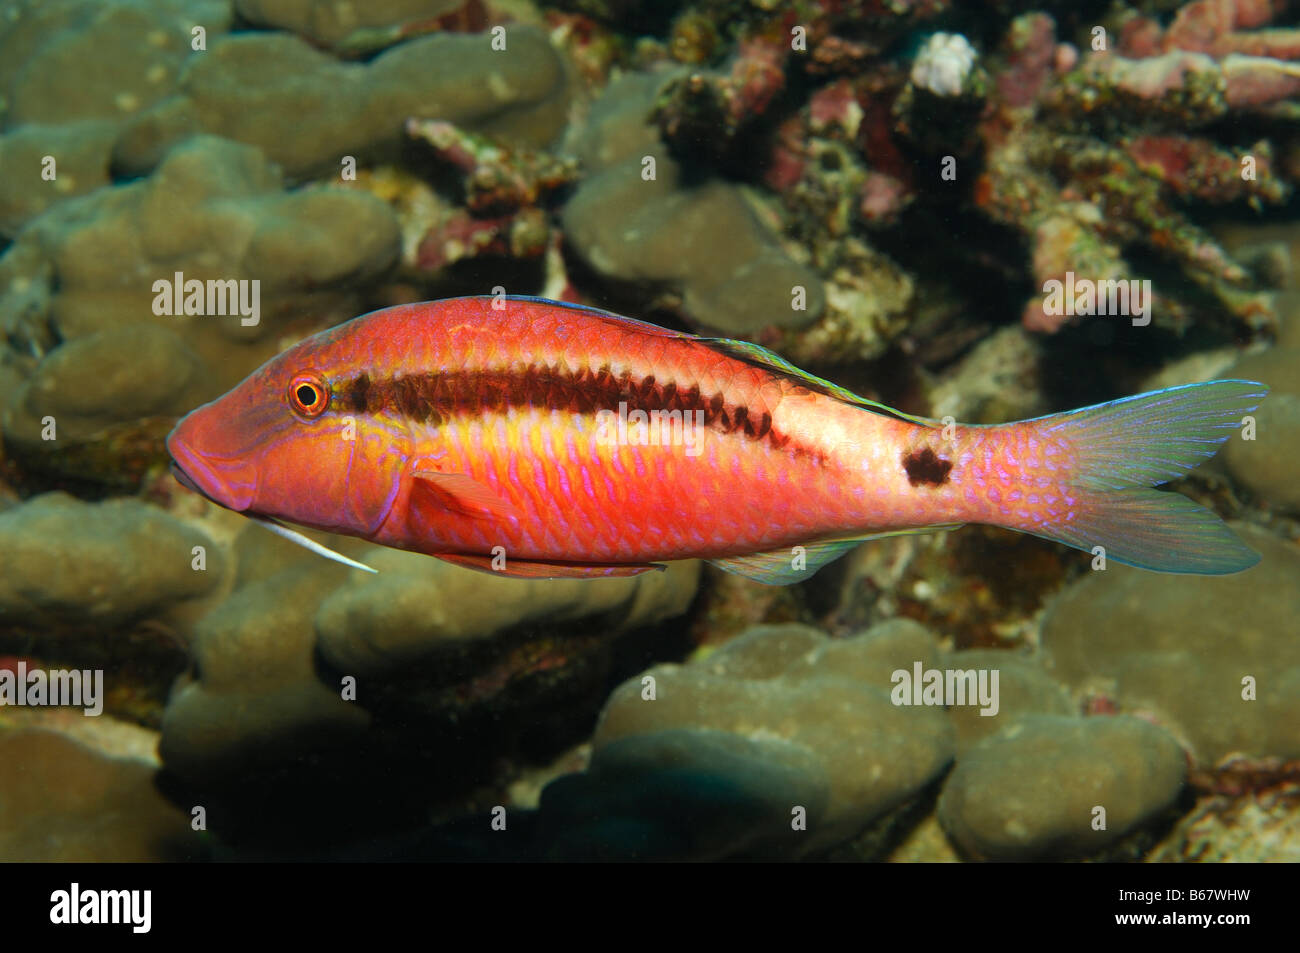 Long Barbel Goatfish Parupeneus macronema Marsa Alam Red Sea Egypt Stock Photo